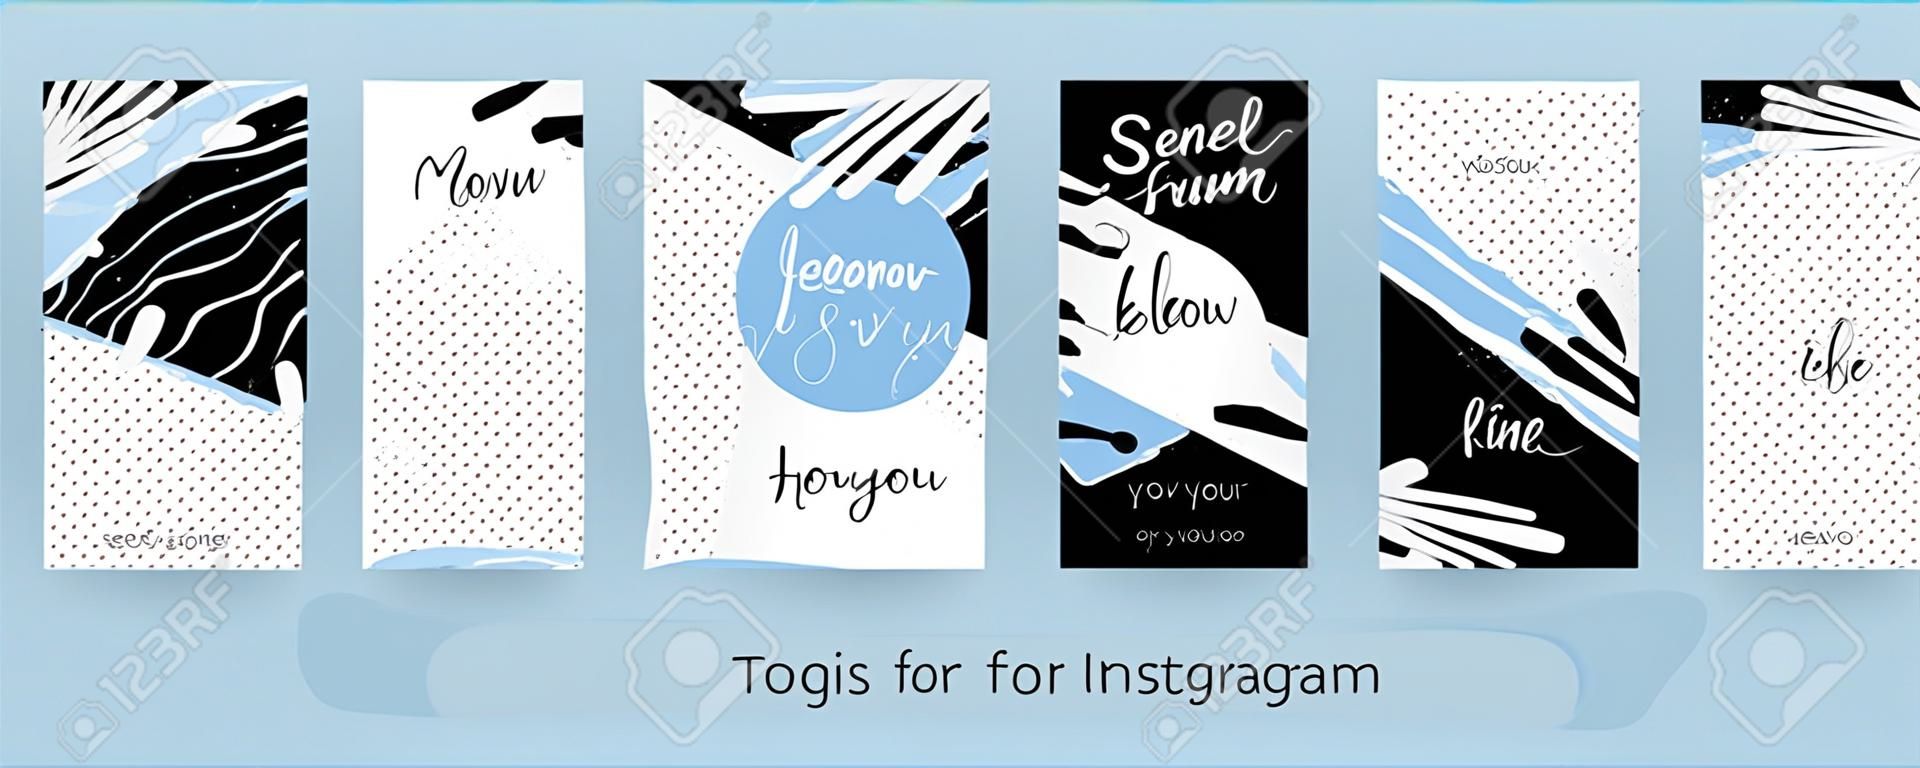 Instagramのストーリー、ベクトルイラストのためのトレンディな編集可能なテンプレート。ソーシャルメディアのデザインの背景。手描きの抽象カード。